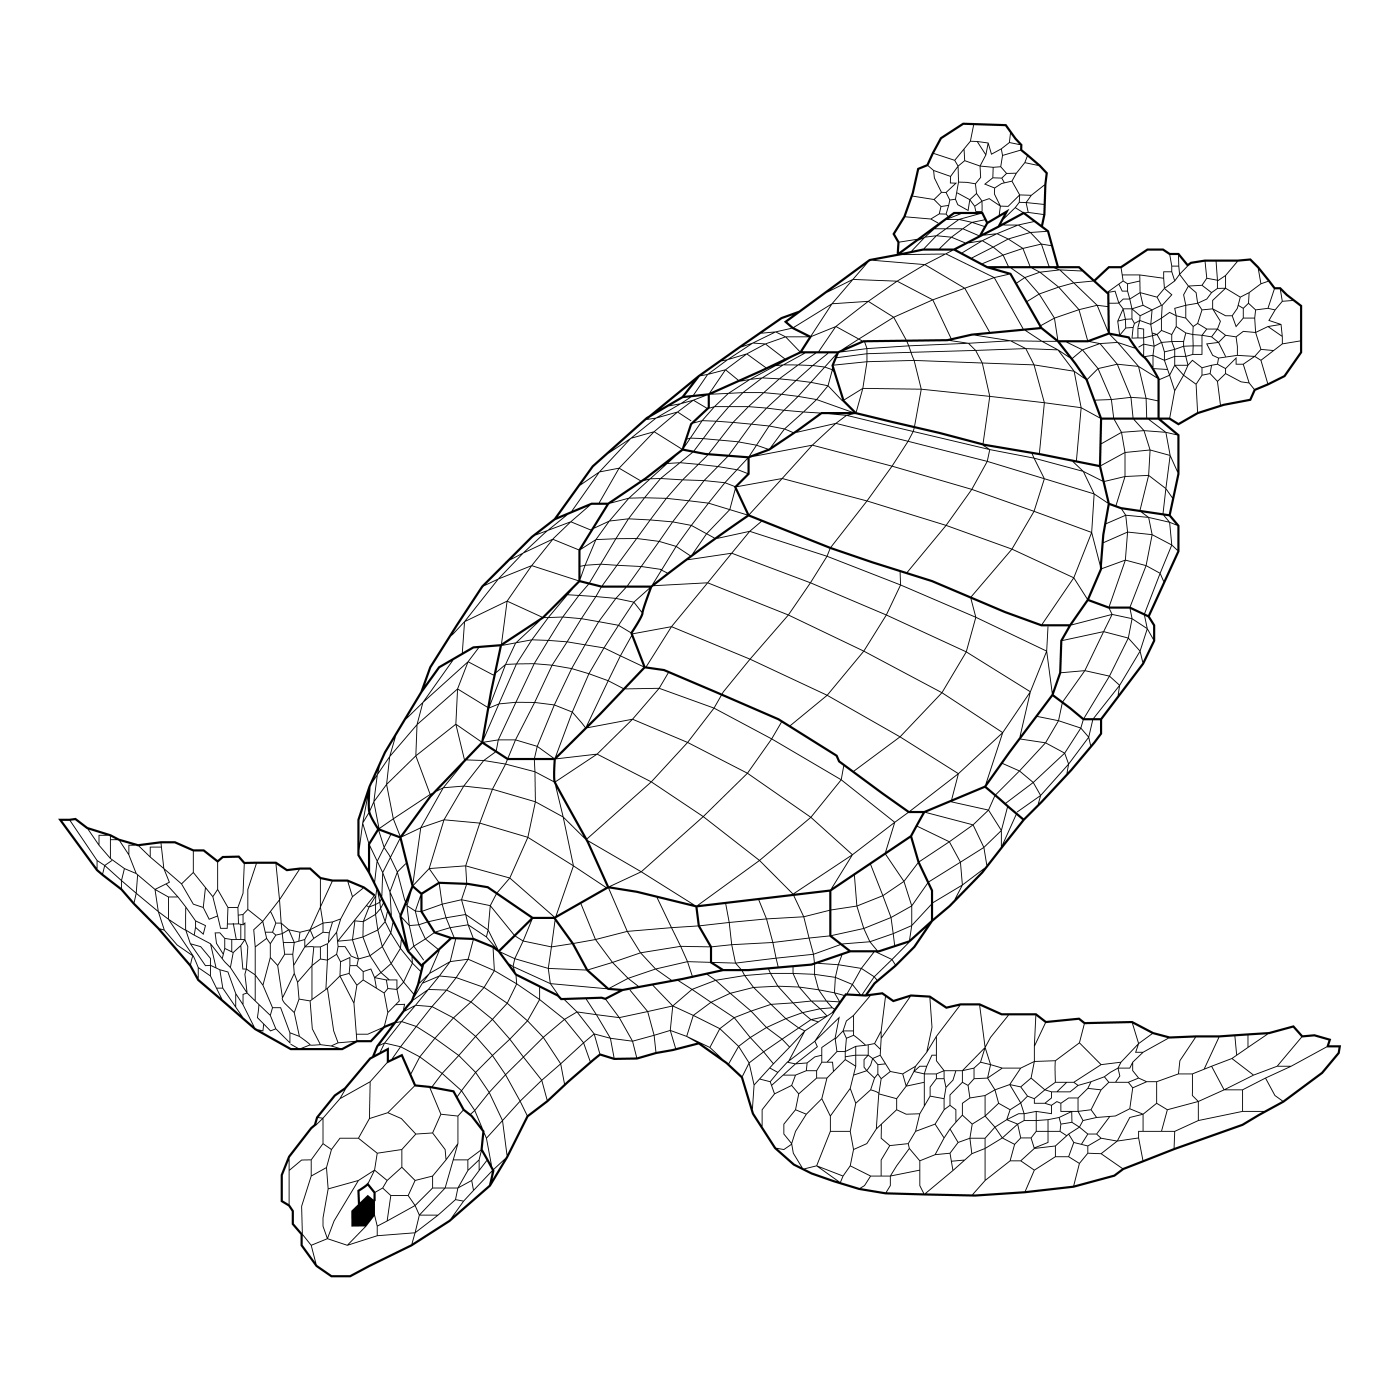 T turtle. Морская черепаха рисунок. Морская черепаха рисунок цветными карандашами. Лоу Поли черепаха. Нарисовать морскую черепаху карандашом поэтапно.